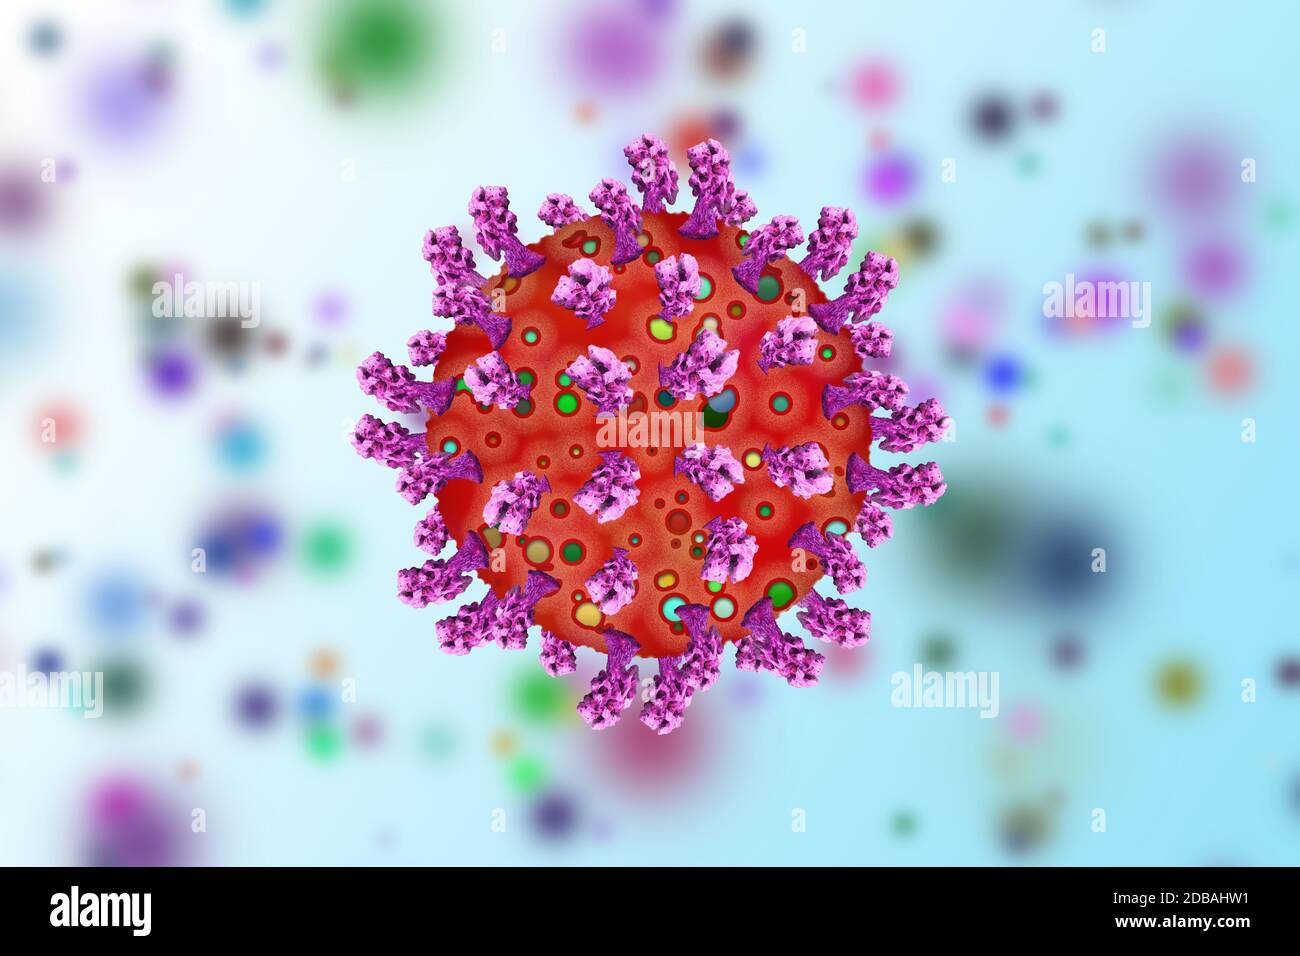 Brote de coronavirus contagioso y coronavirus crisis médica de gripe como casos peligrosos de cepa de gripe o riesgo pandémico de salud pública Foto de stock